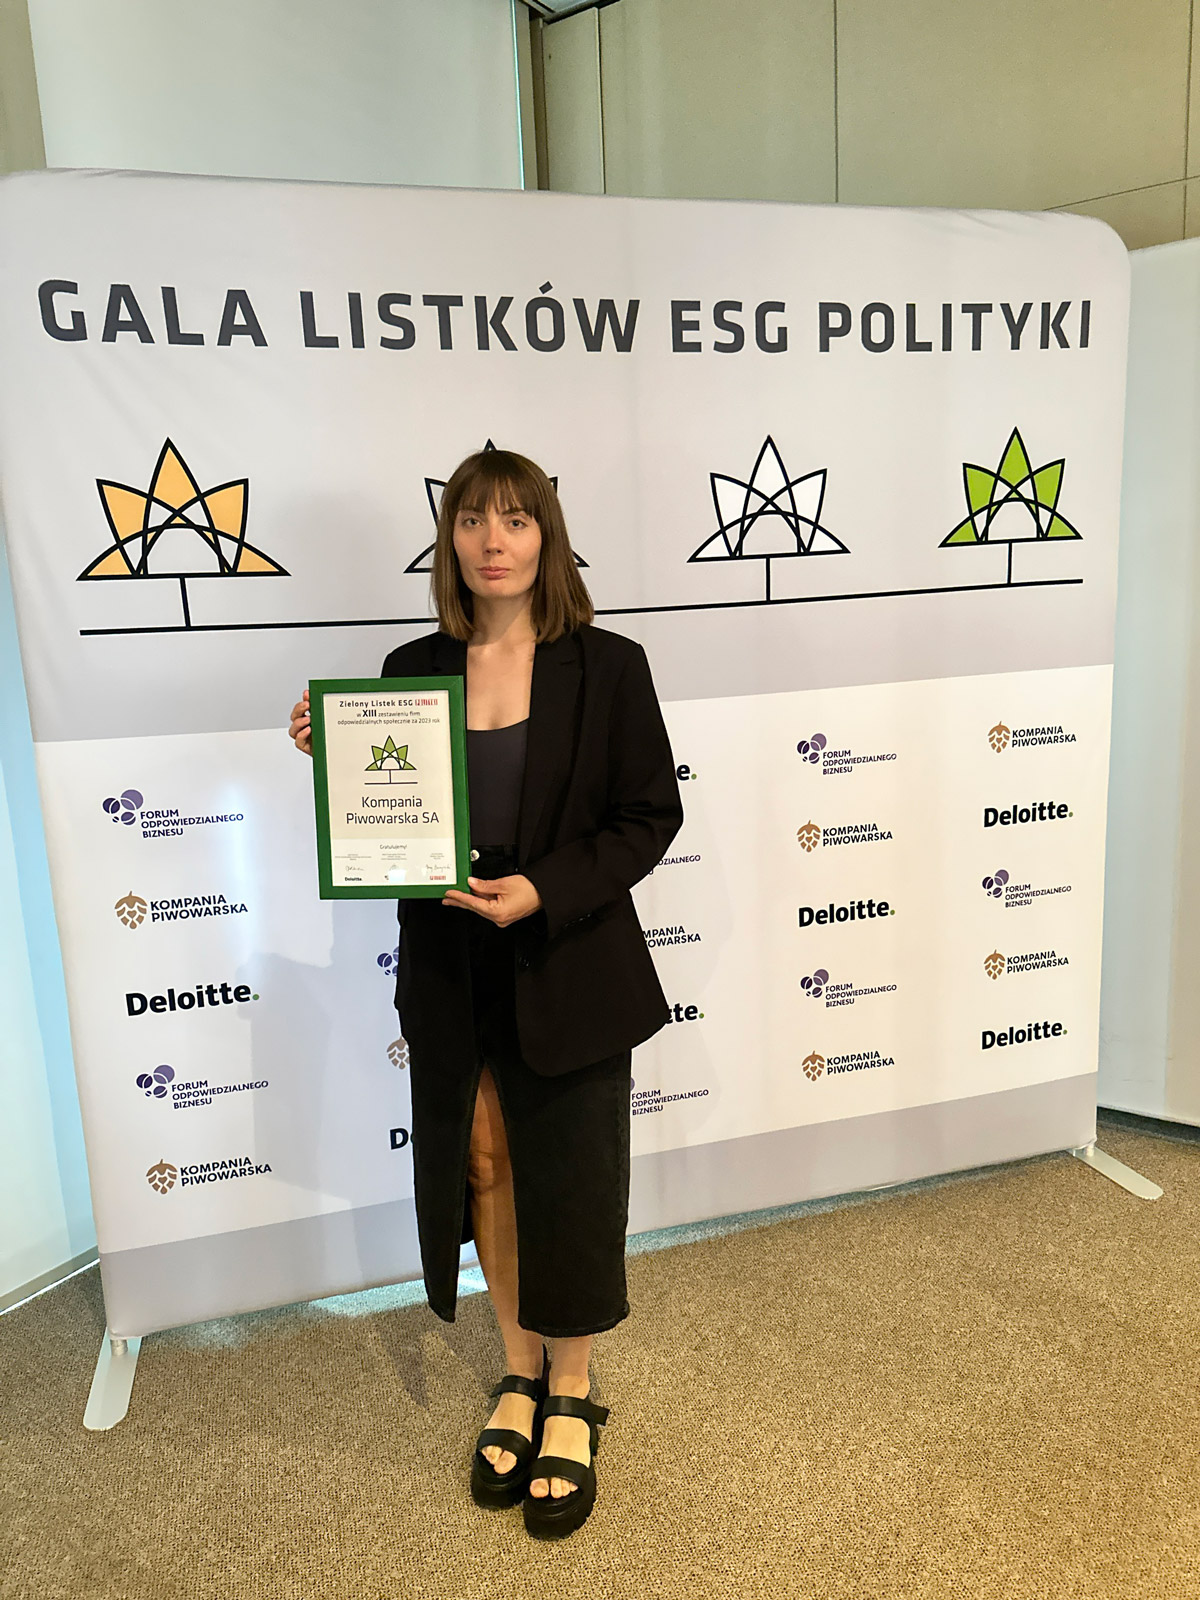 Kompania Piwowarska receives the Green ESG Leaf